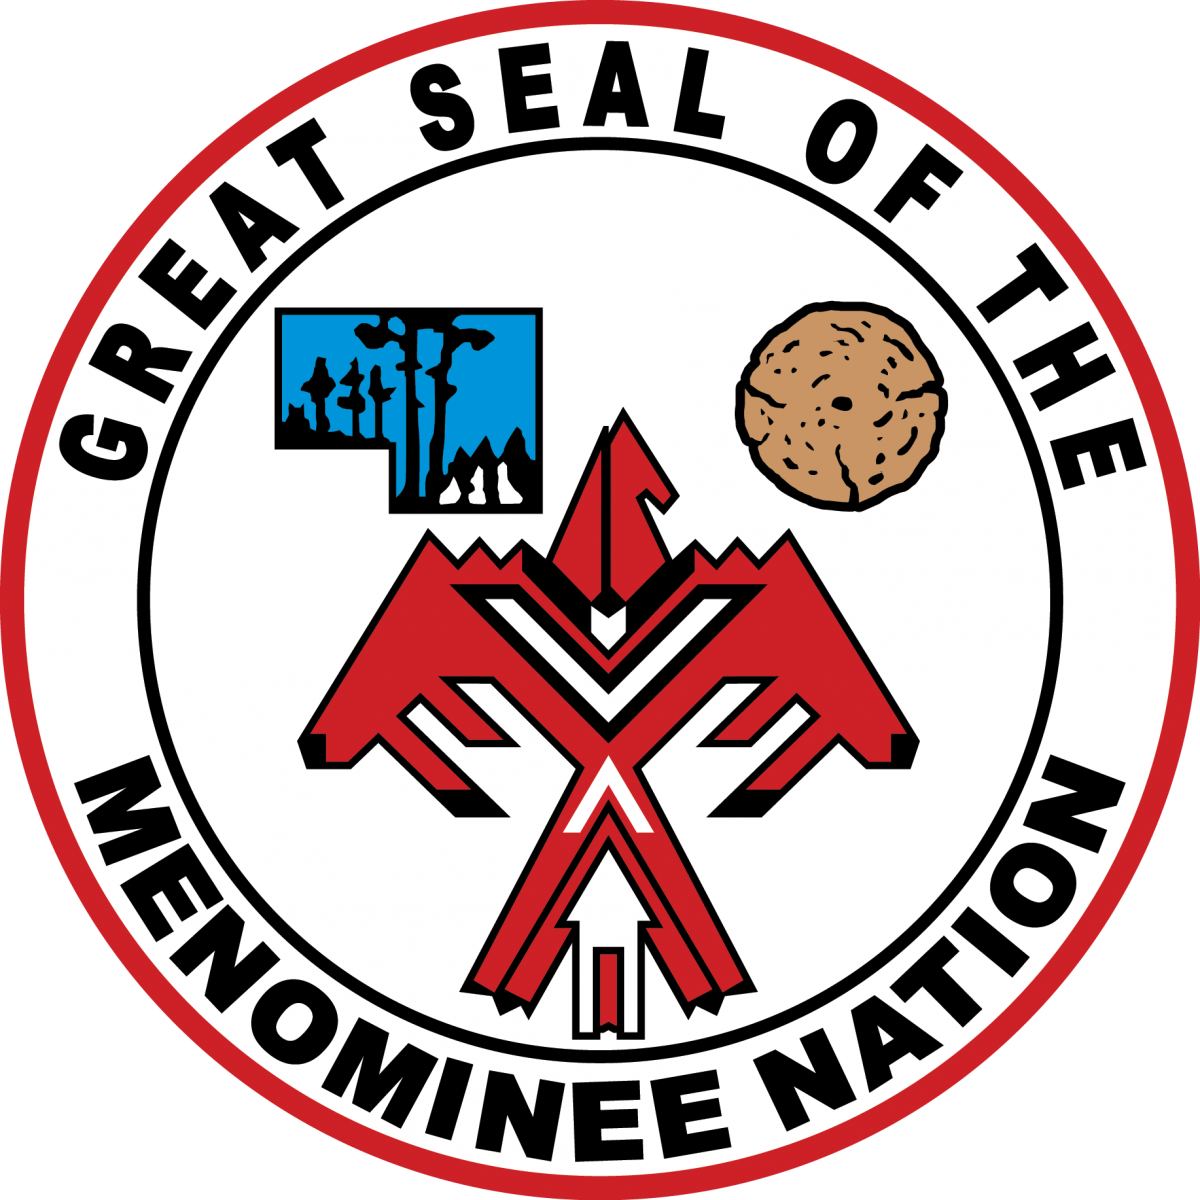 Menominee Tribe seal